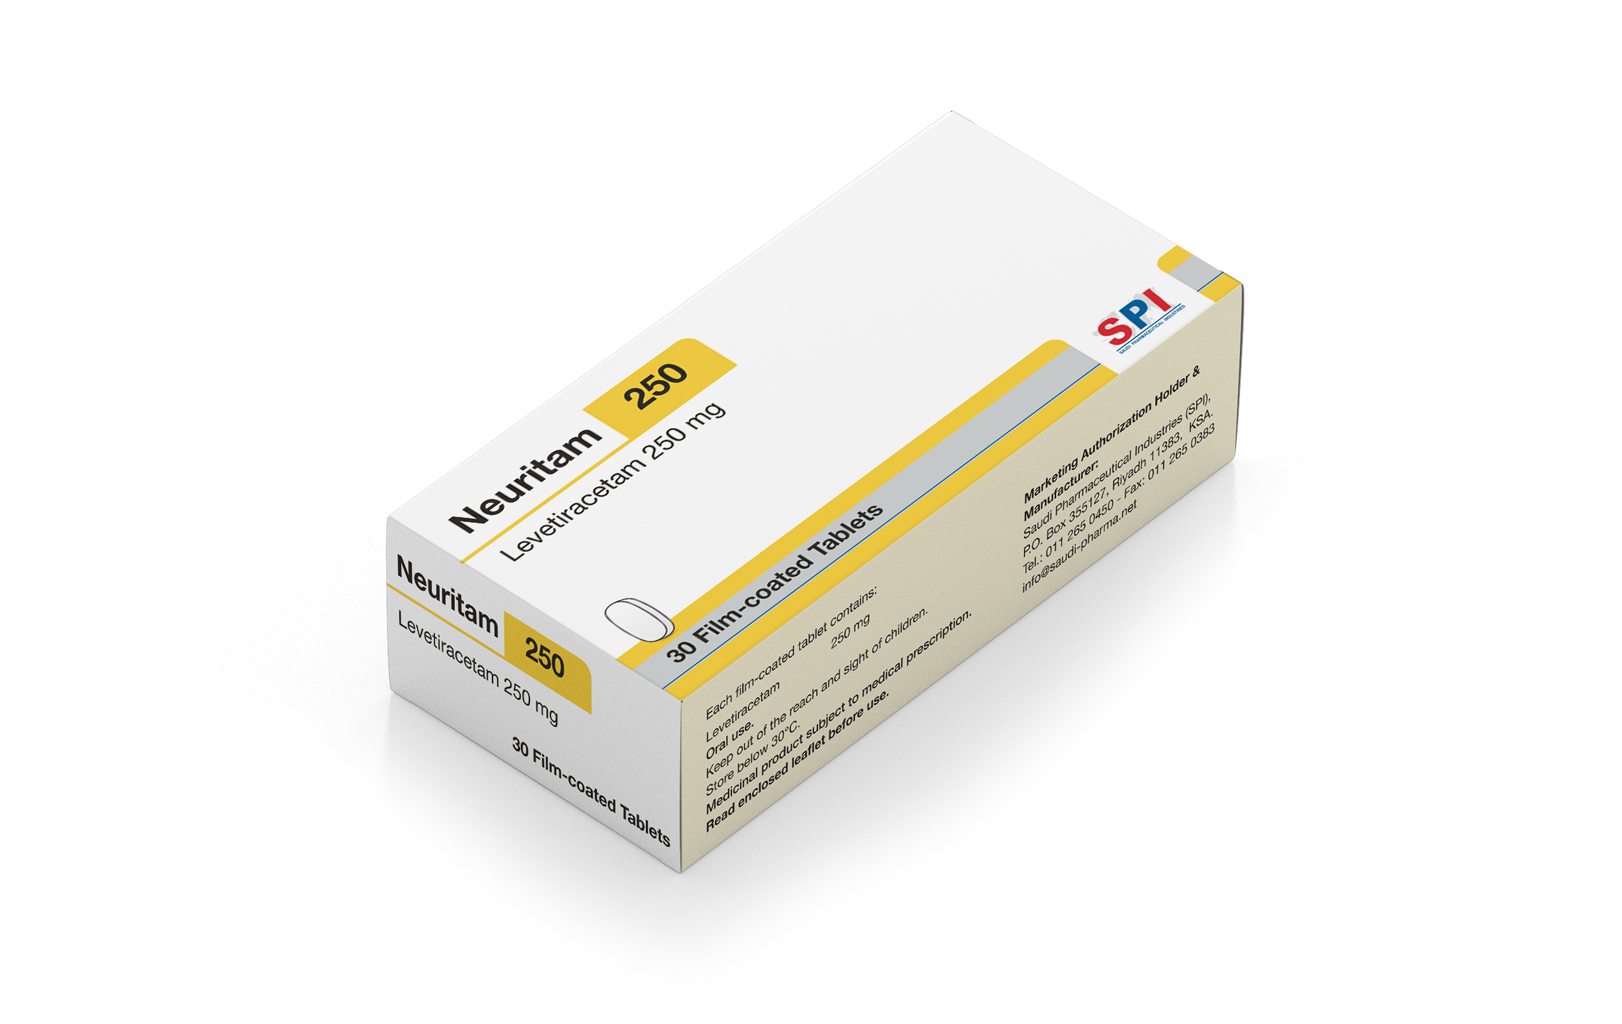 Neuritam 250 mg Film-coated Tablet